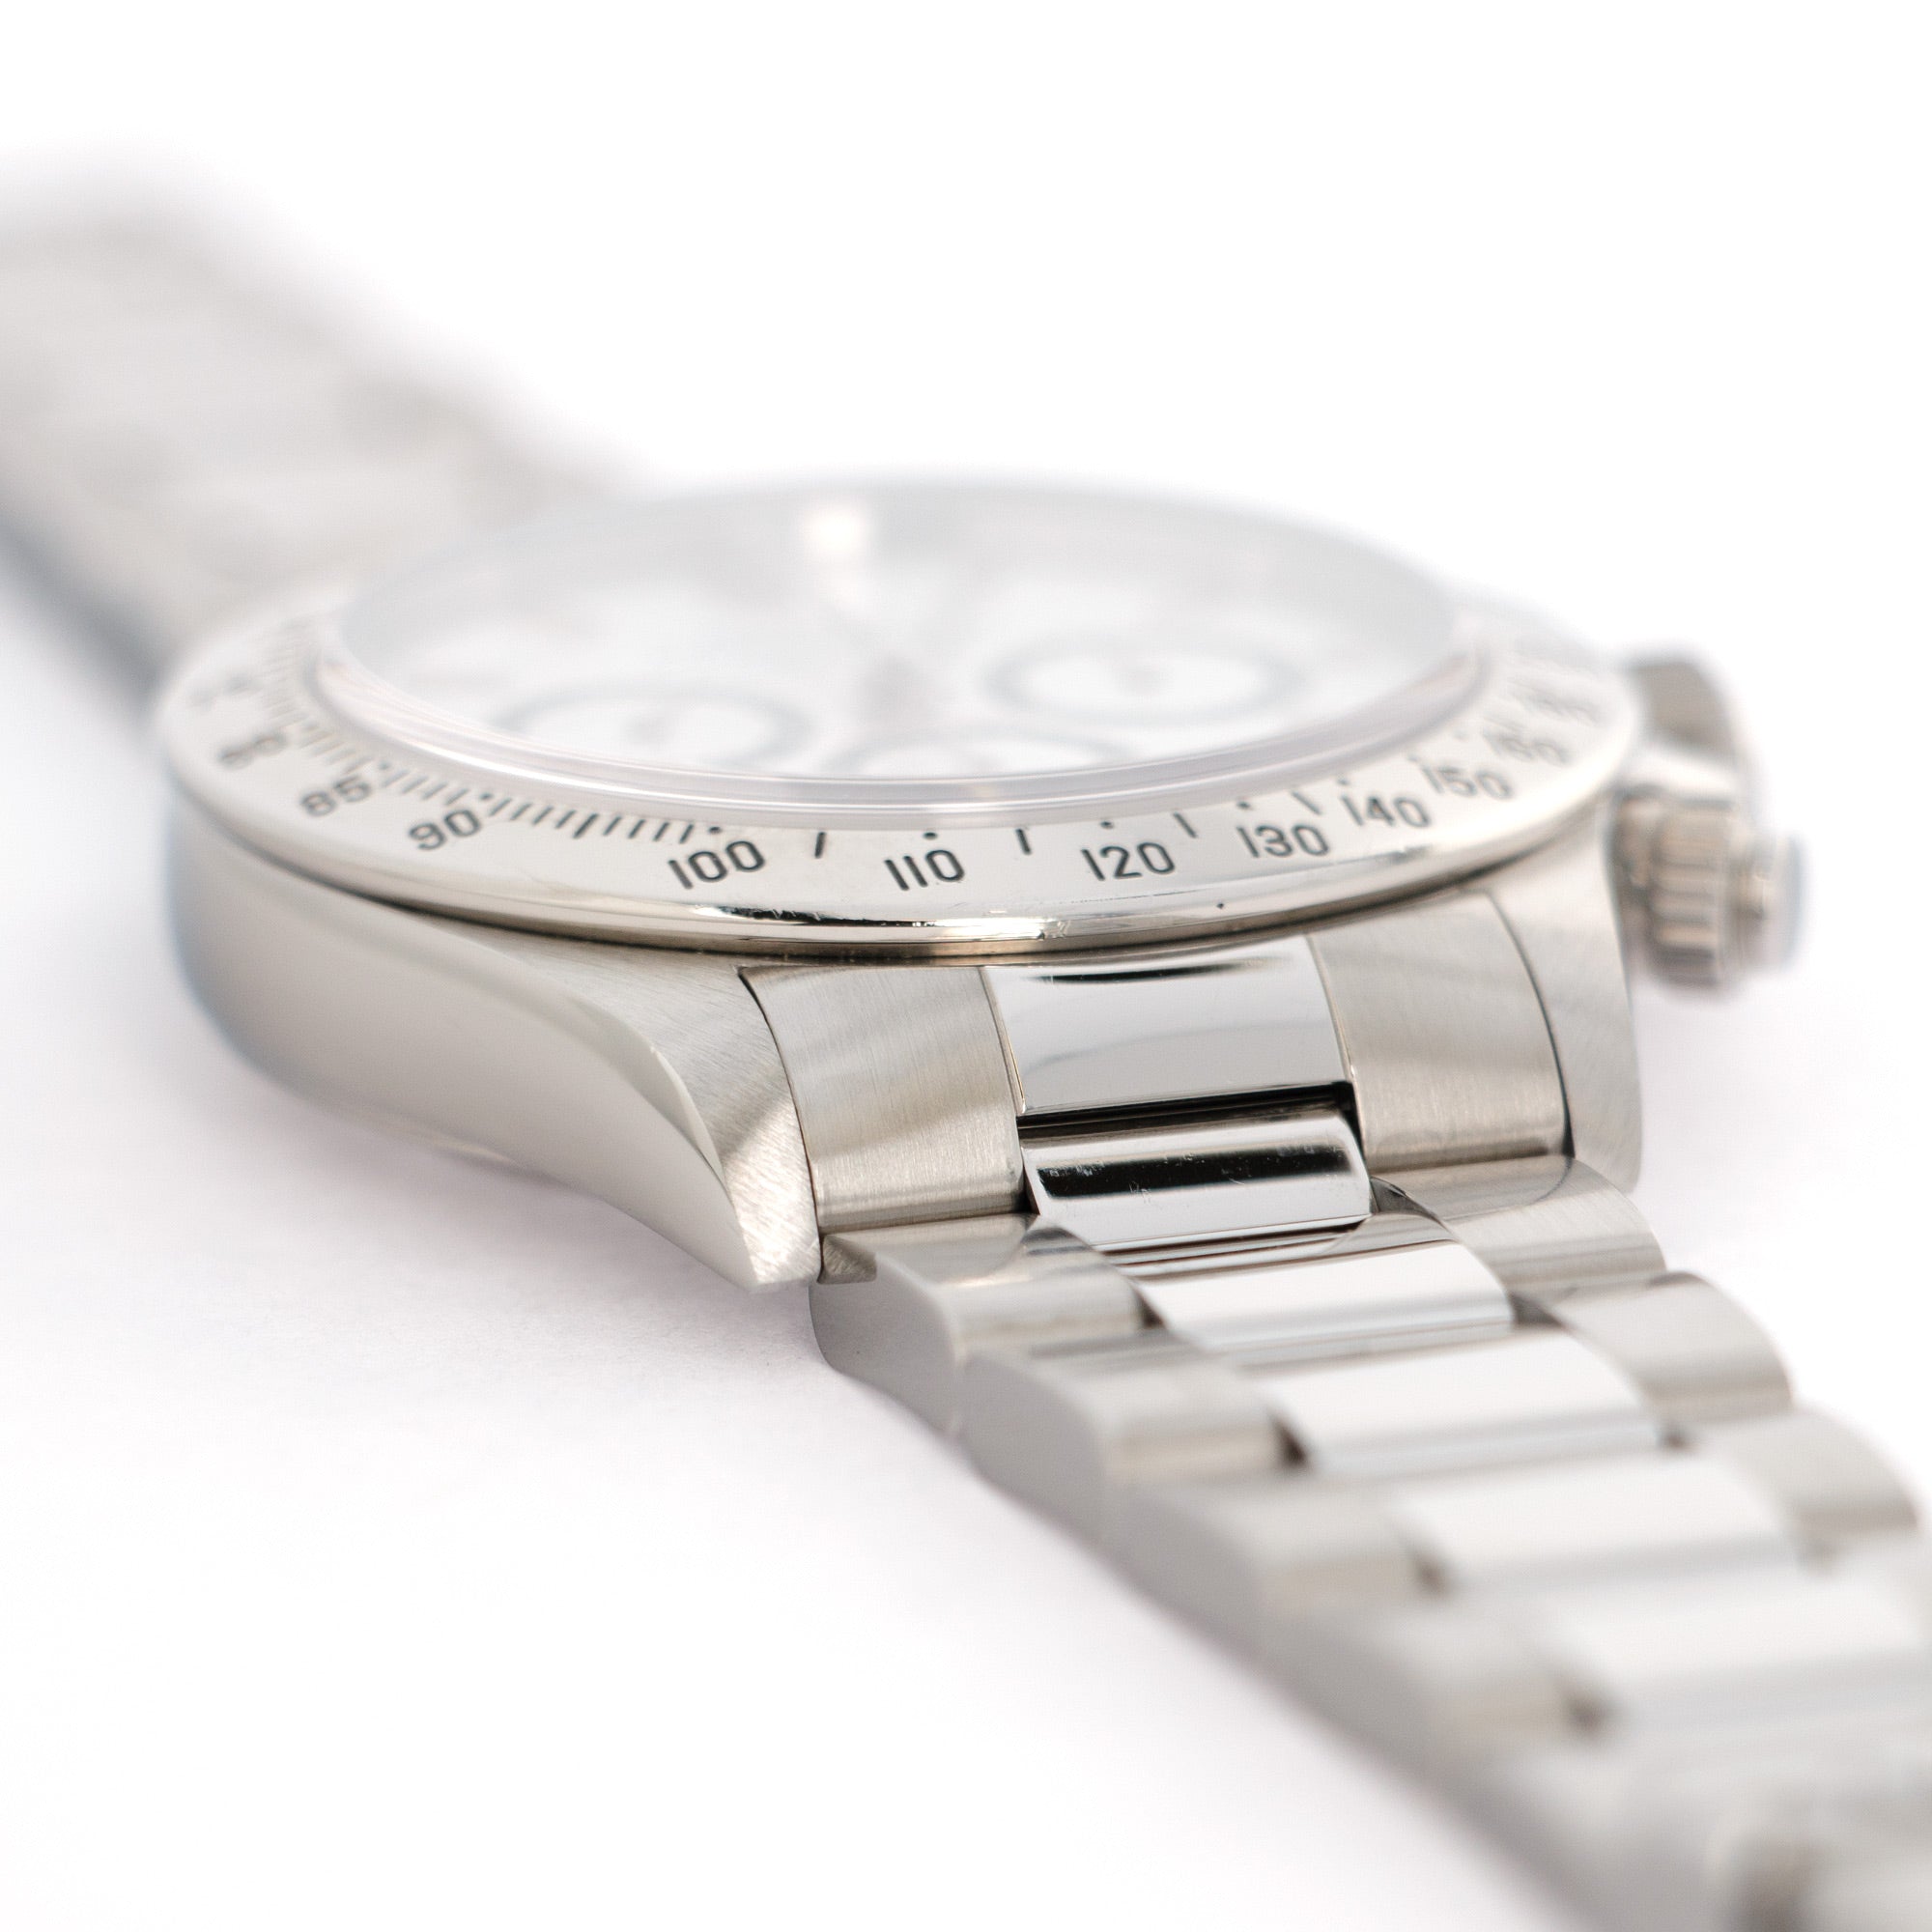 Rolex - Rolex Cosmograph Daytona Zenith Watch, Ref. 16520 with Original Warranty - The Keystone Watches